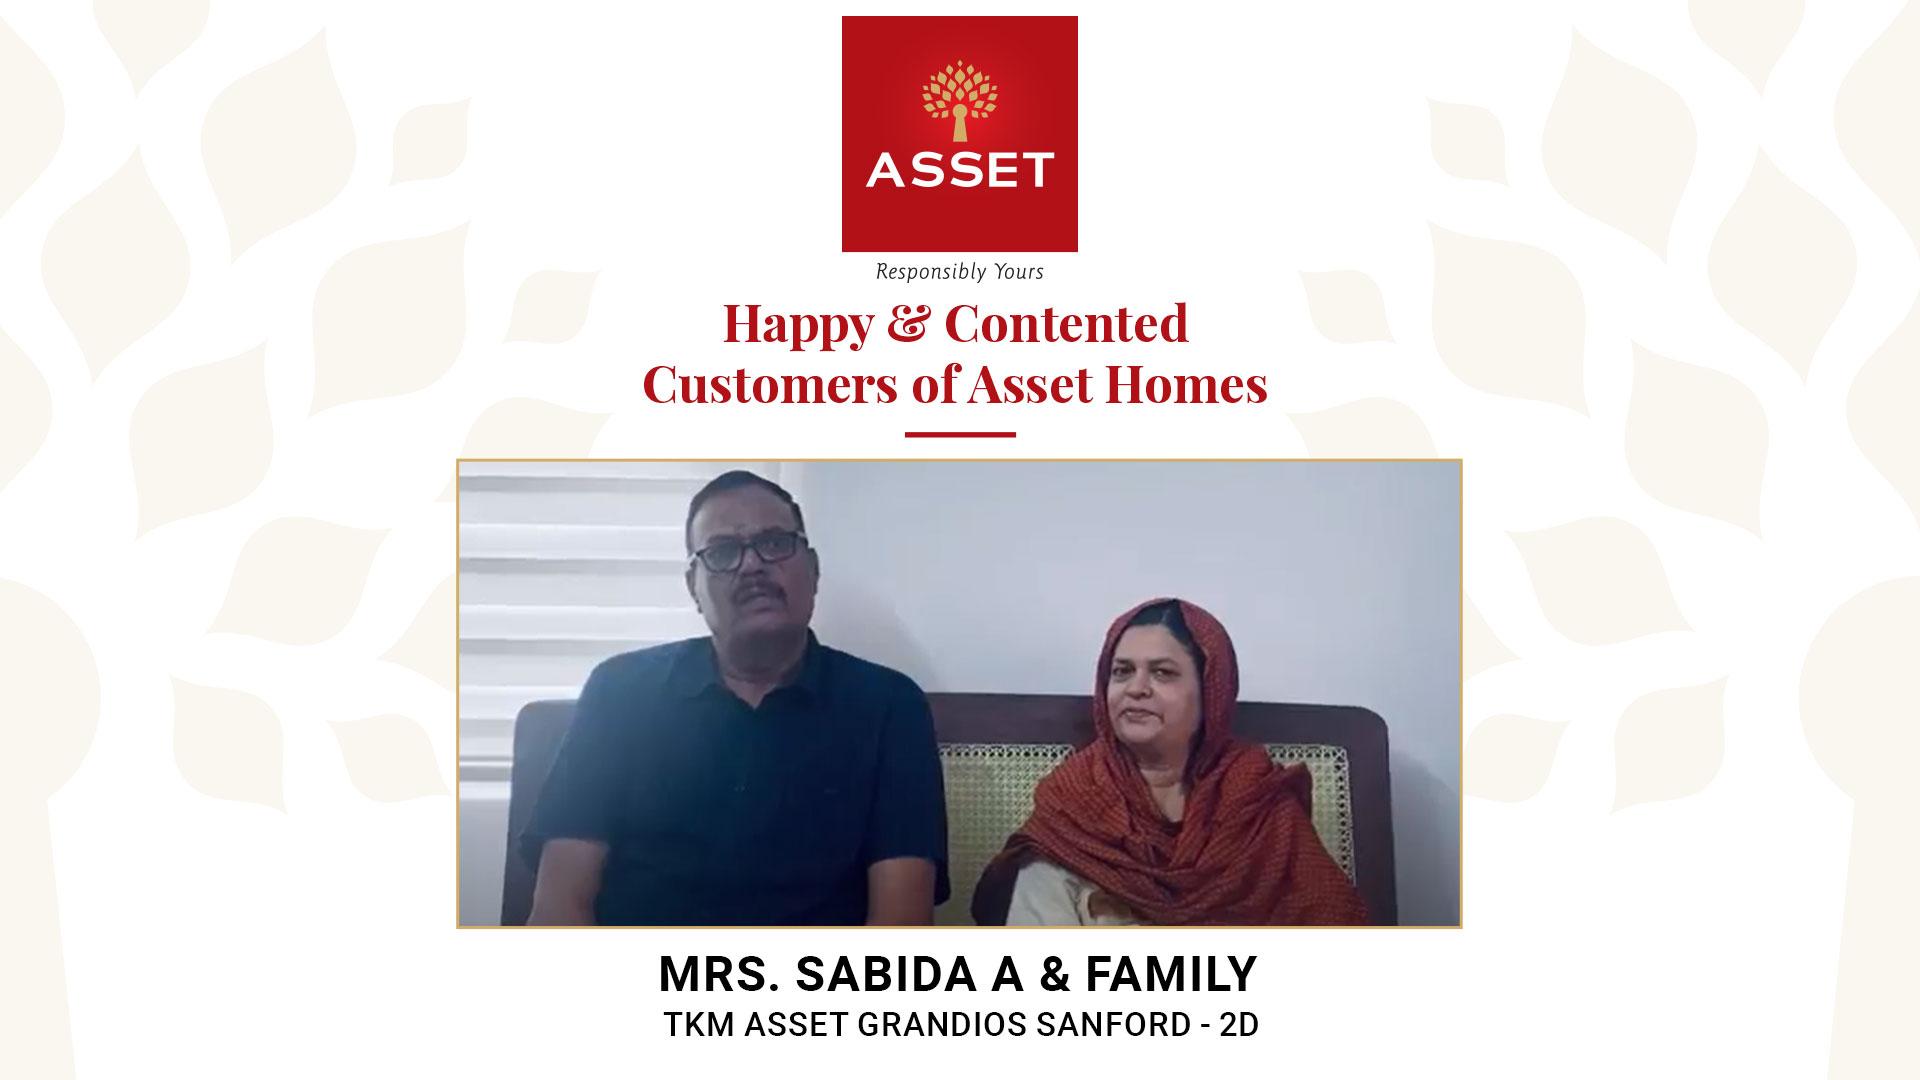 Mrs. Sabida A & Family, TKM Asset Grandios Sanford – 2D